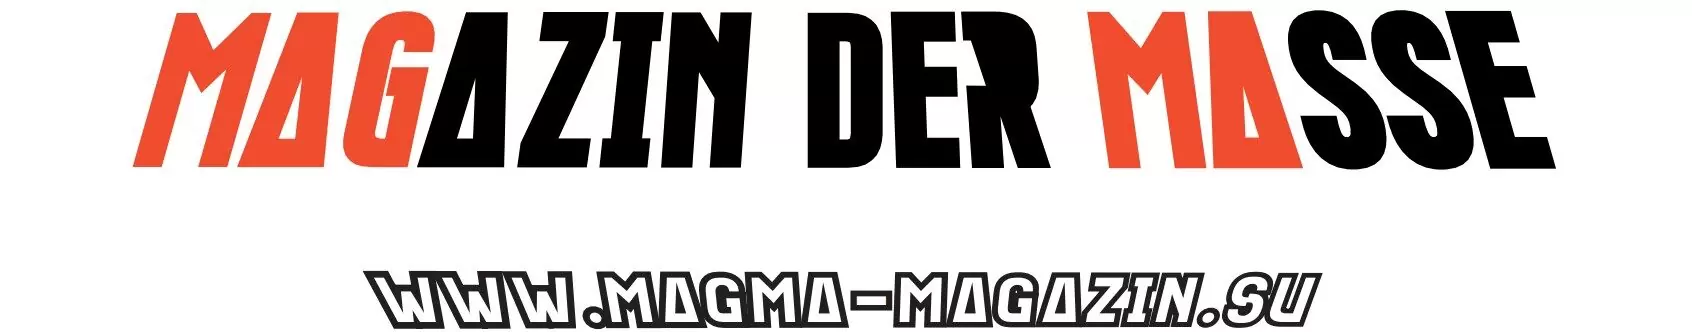 MagMa – Magazin der Masse